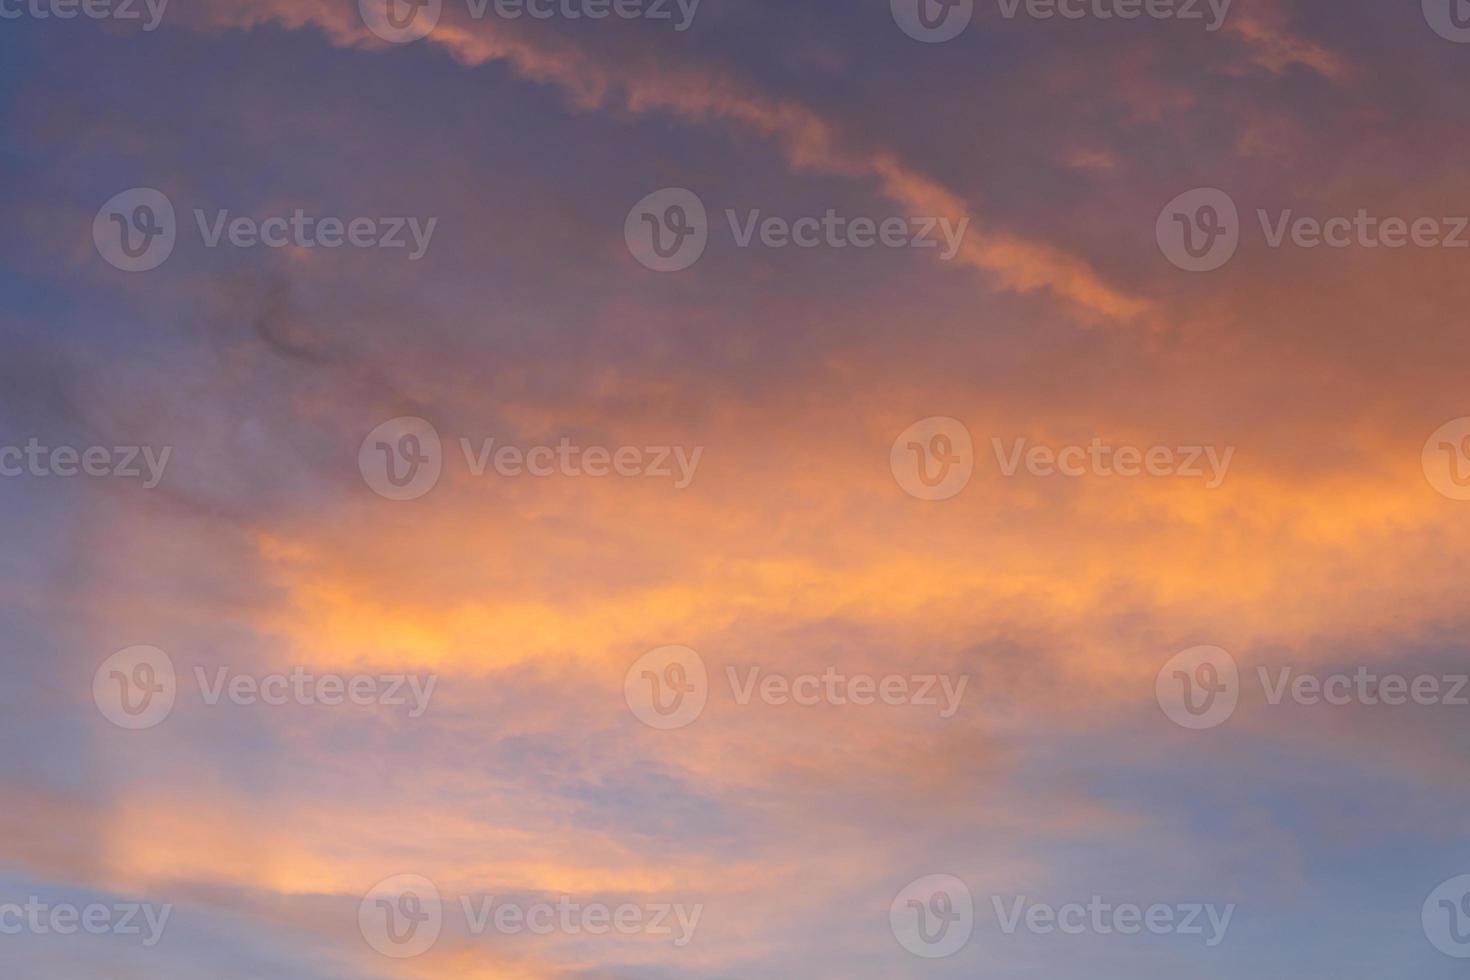 solnedgång ljus orange molnig himmel bakgrund foto